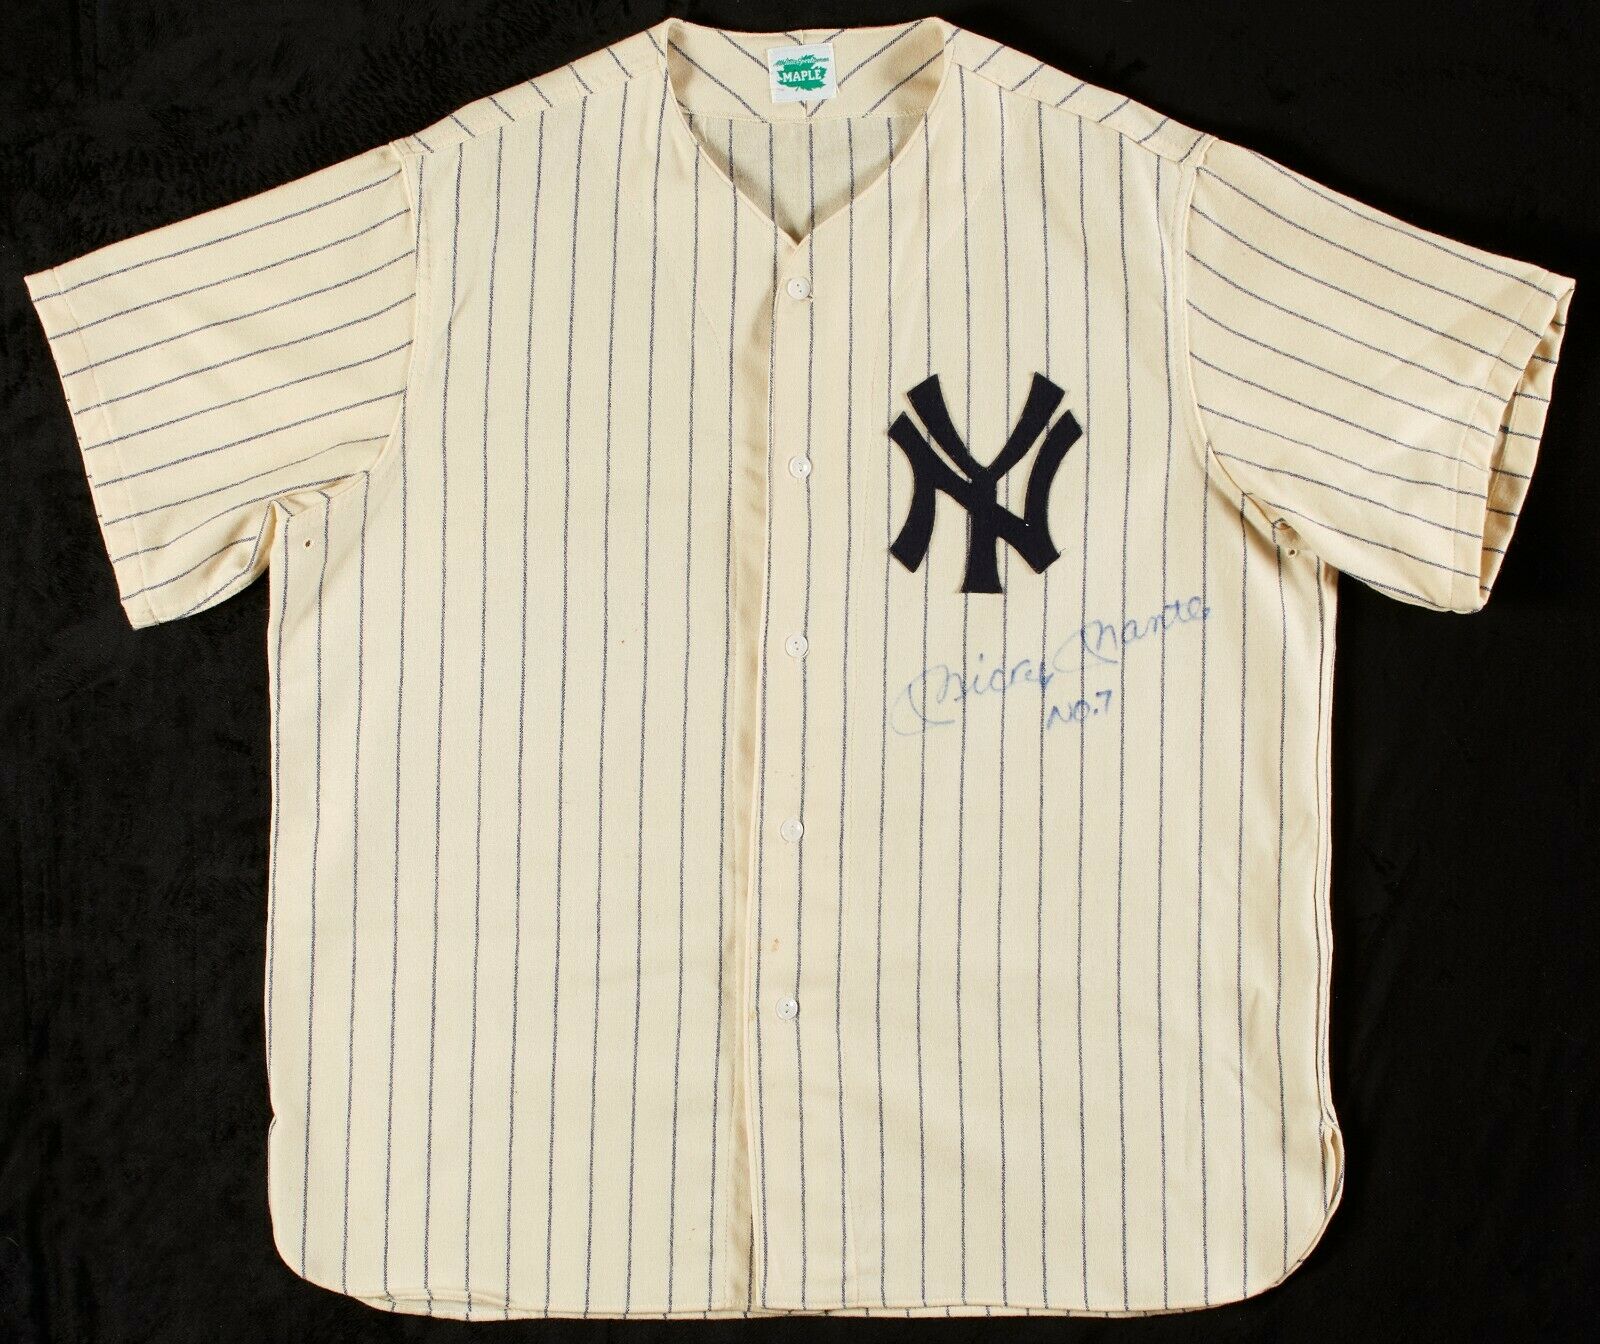 New York Yankees signed jersey w/ Mickey Mantle, Joe Di